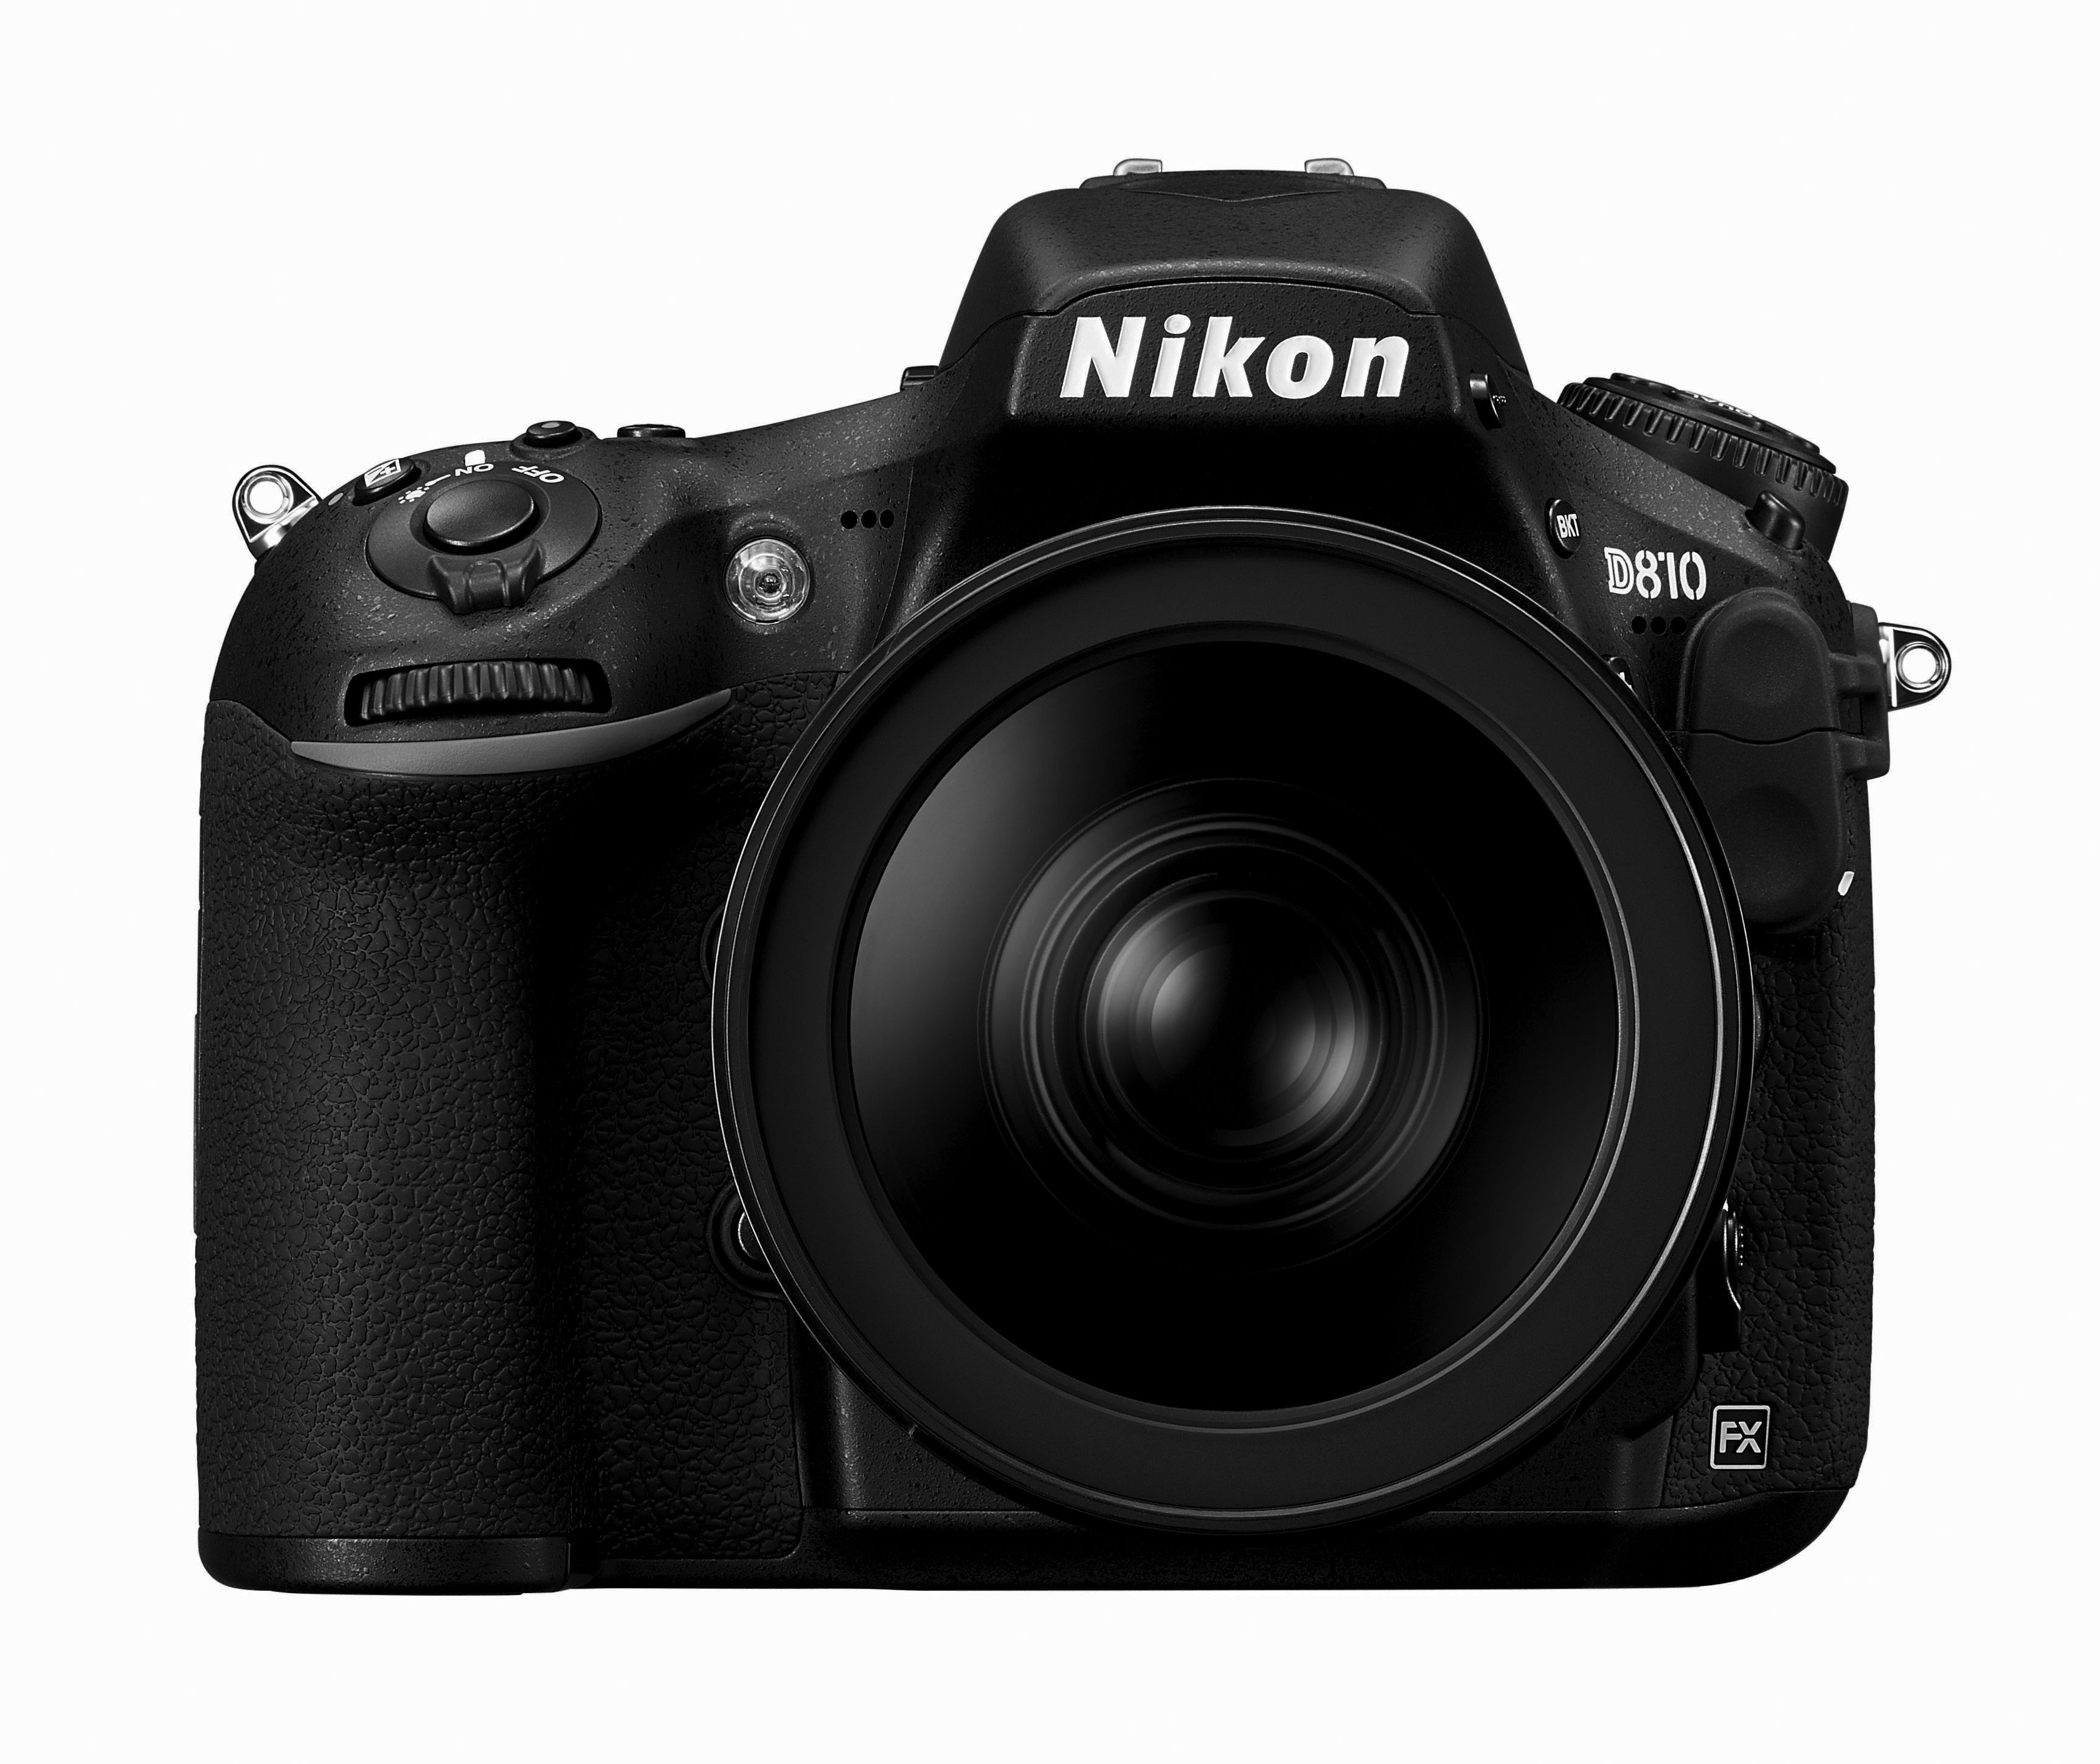 Nikon D810 DSLR camera available now for preorder at Adorama